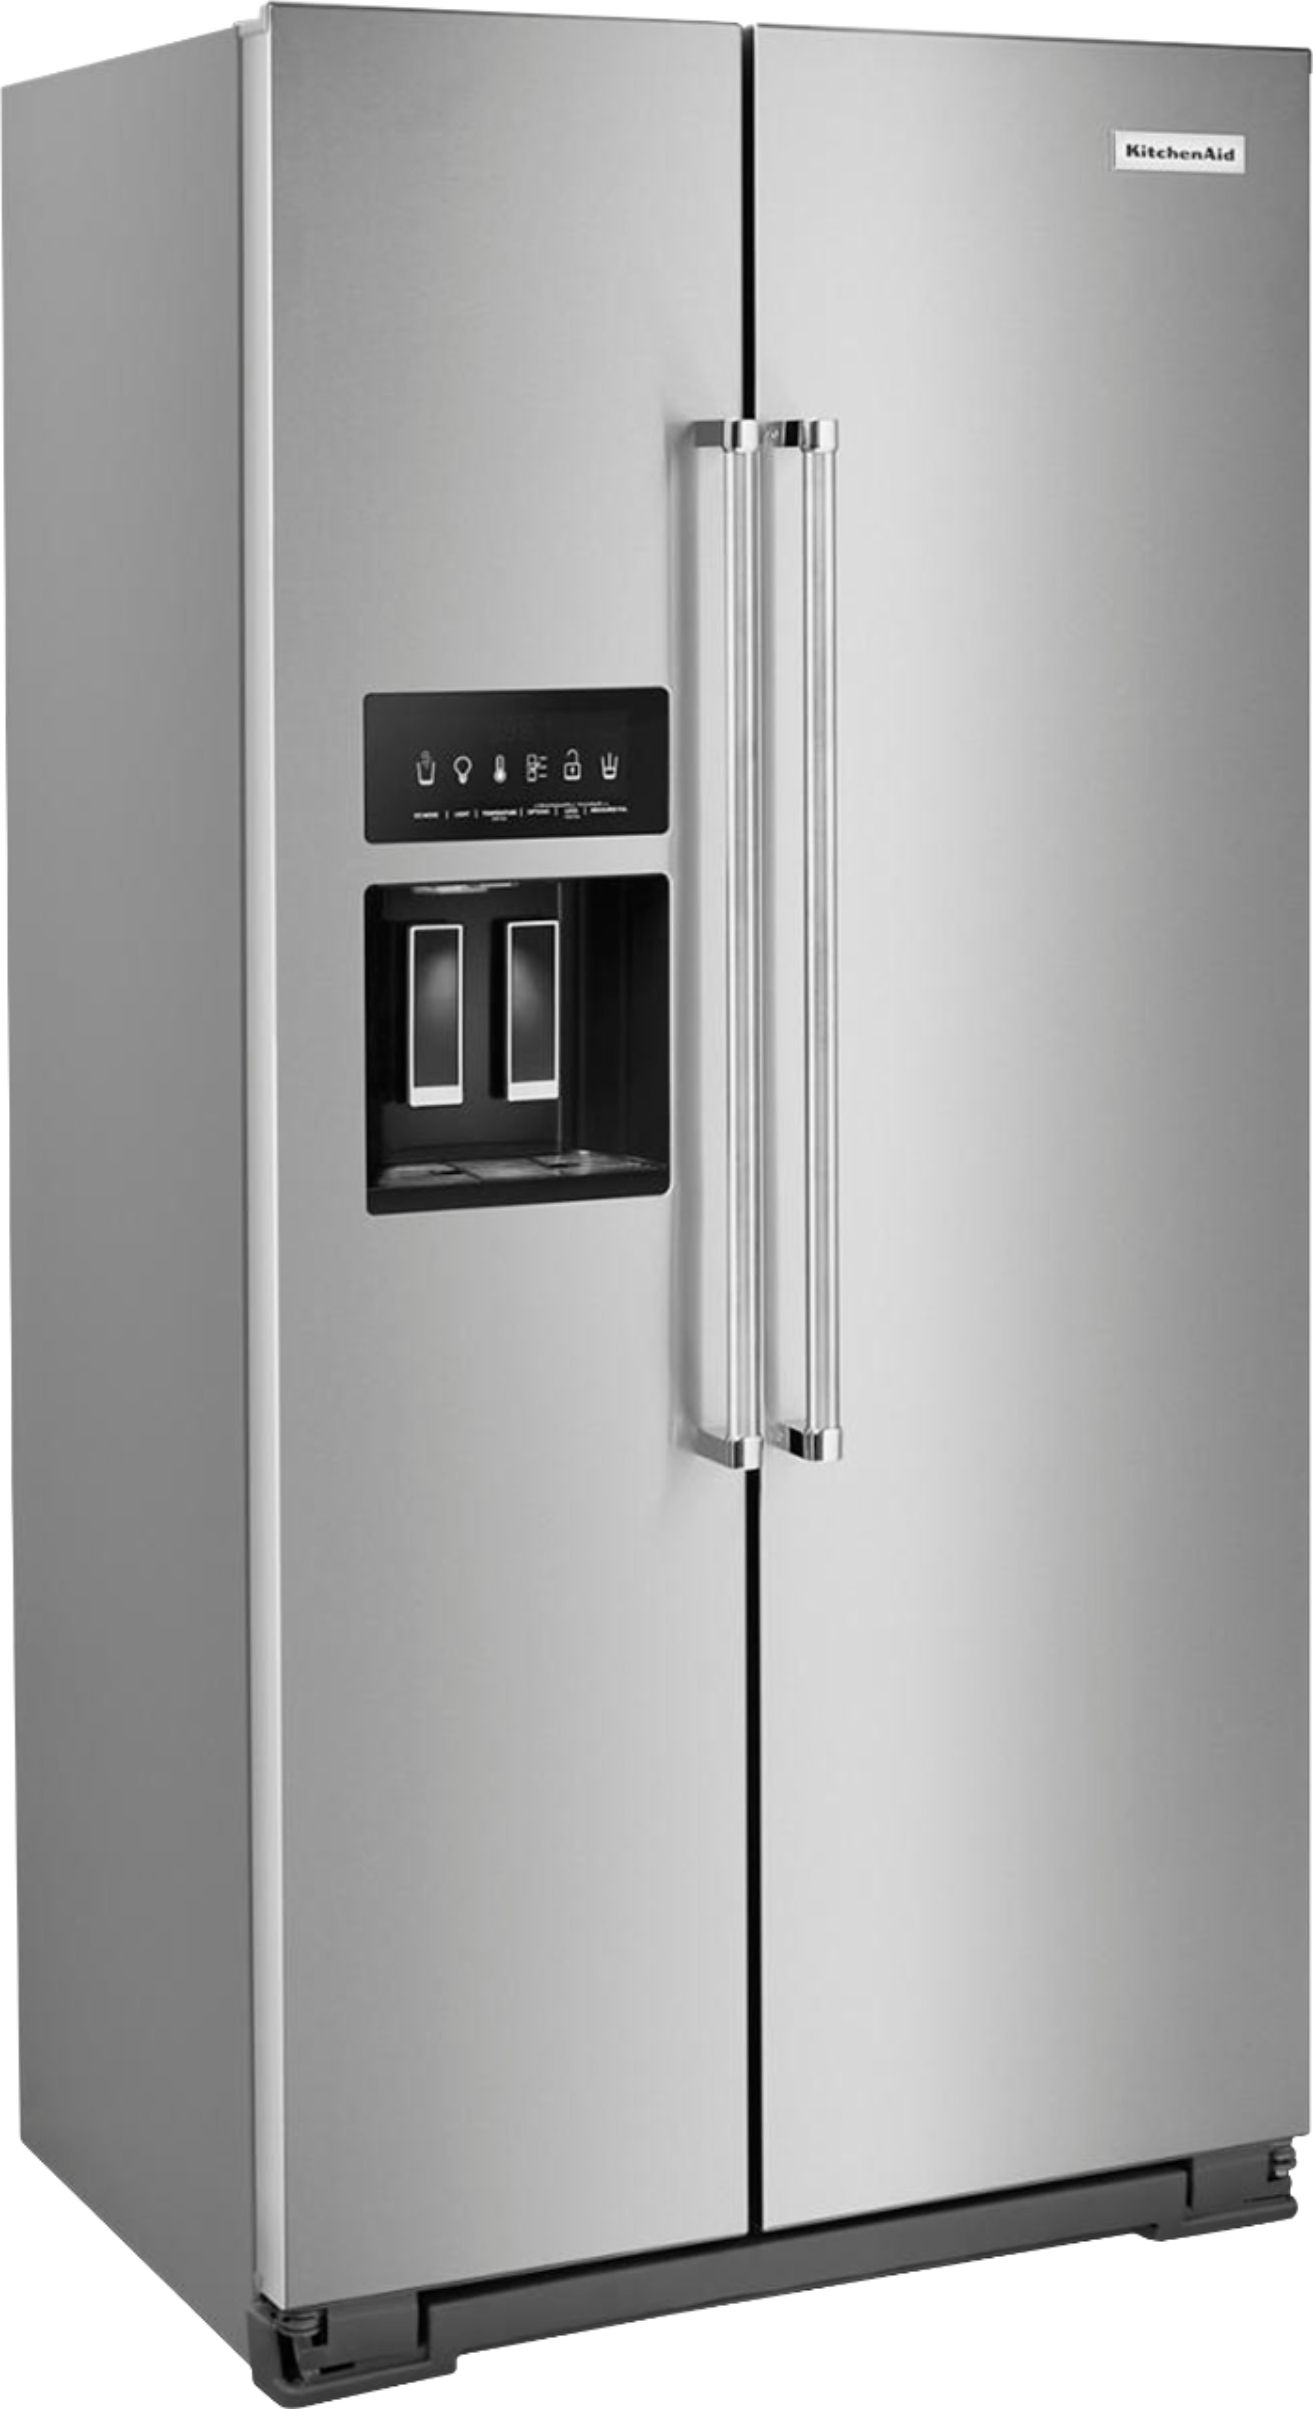 Angle View: KitchenAid - 21.9 Cu. Ft. Counter-Depth French Door Refrigerator - Custom Panel Ready